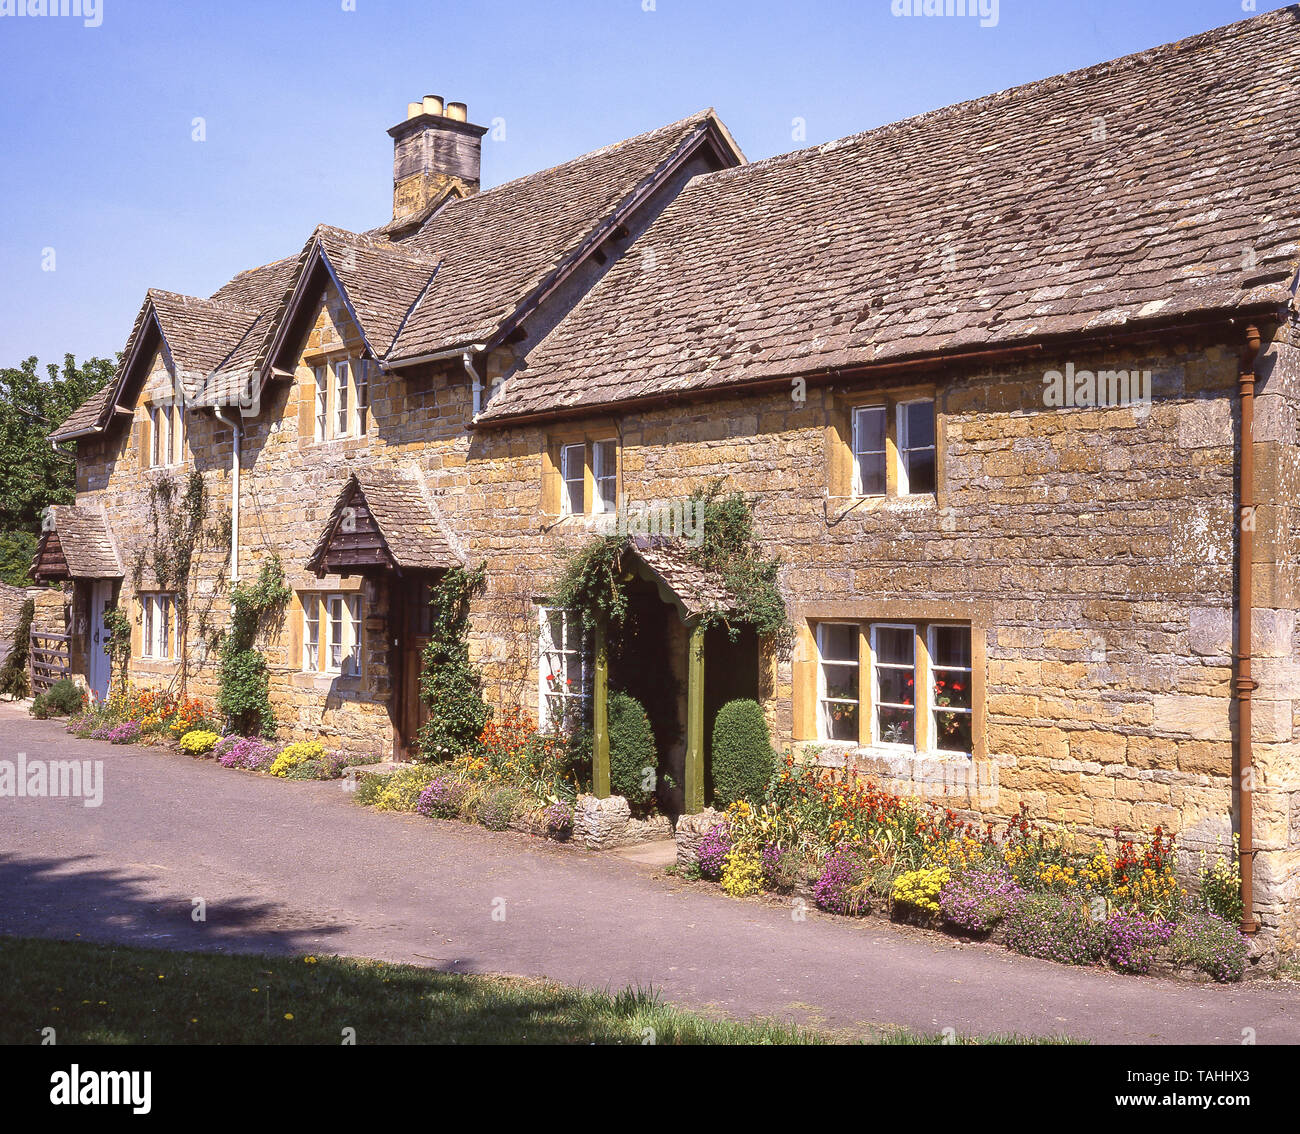 Cotswold stone cottages, Lower Slaughter, Gloucestershire, England, United Kingdom Stock Photo